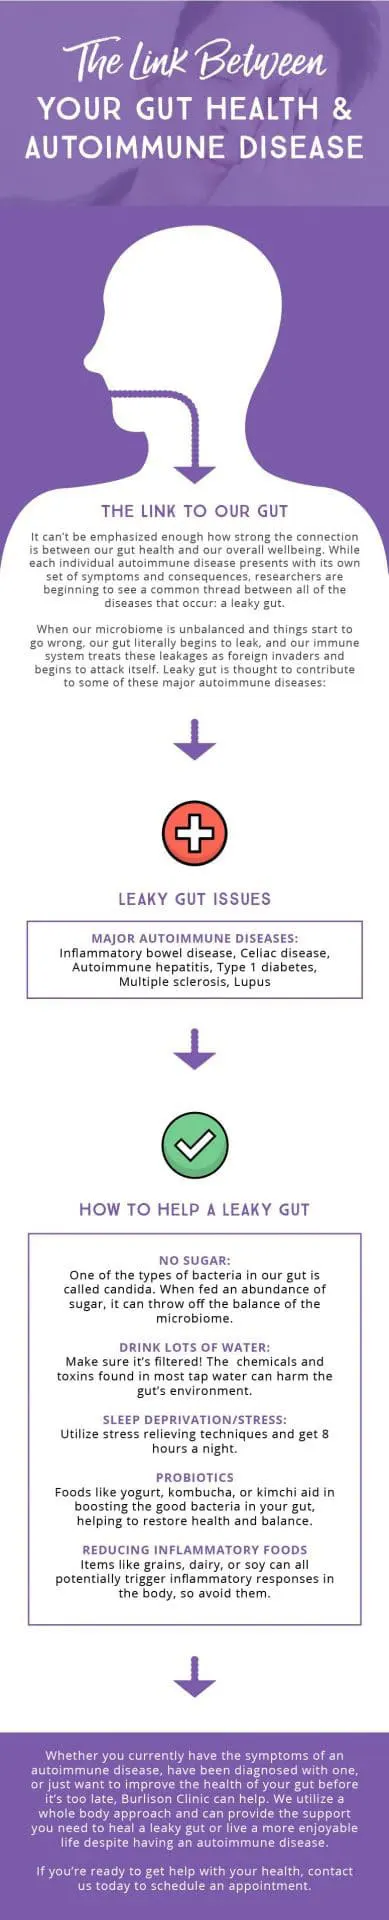 Chiropractic Lombard IL Link Between Gut Health And Autoimmune Disease